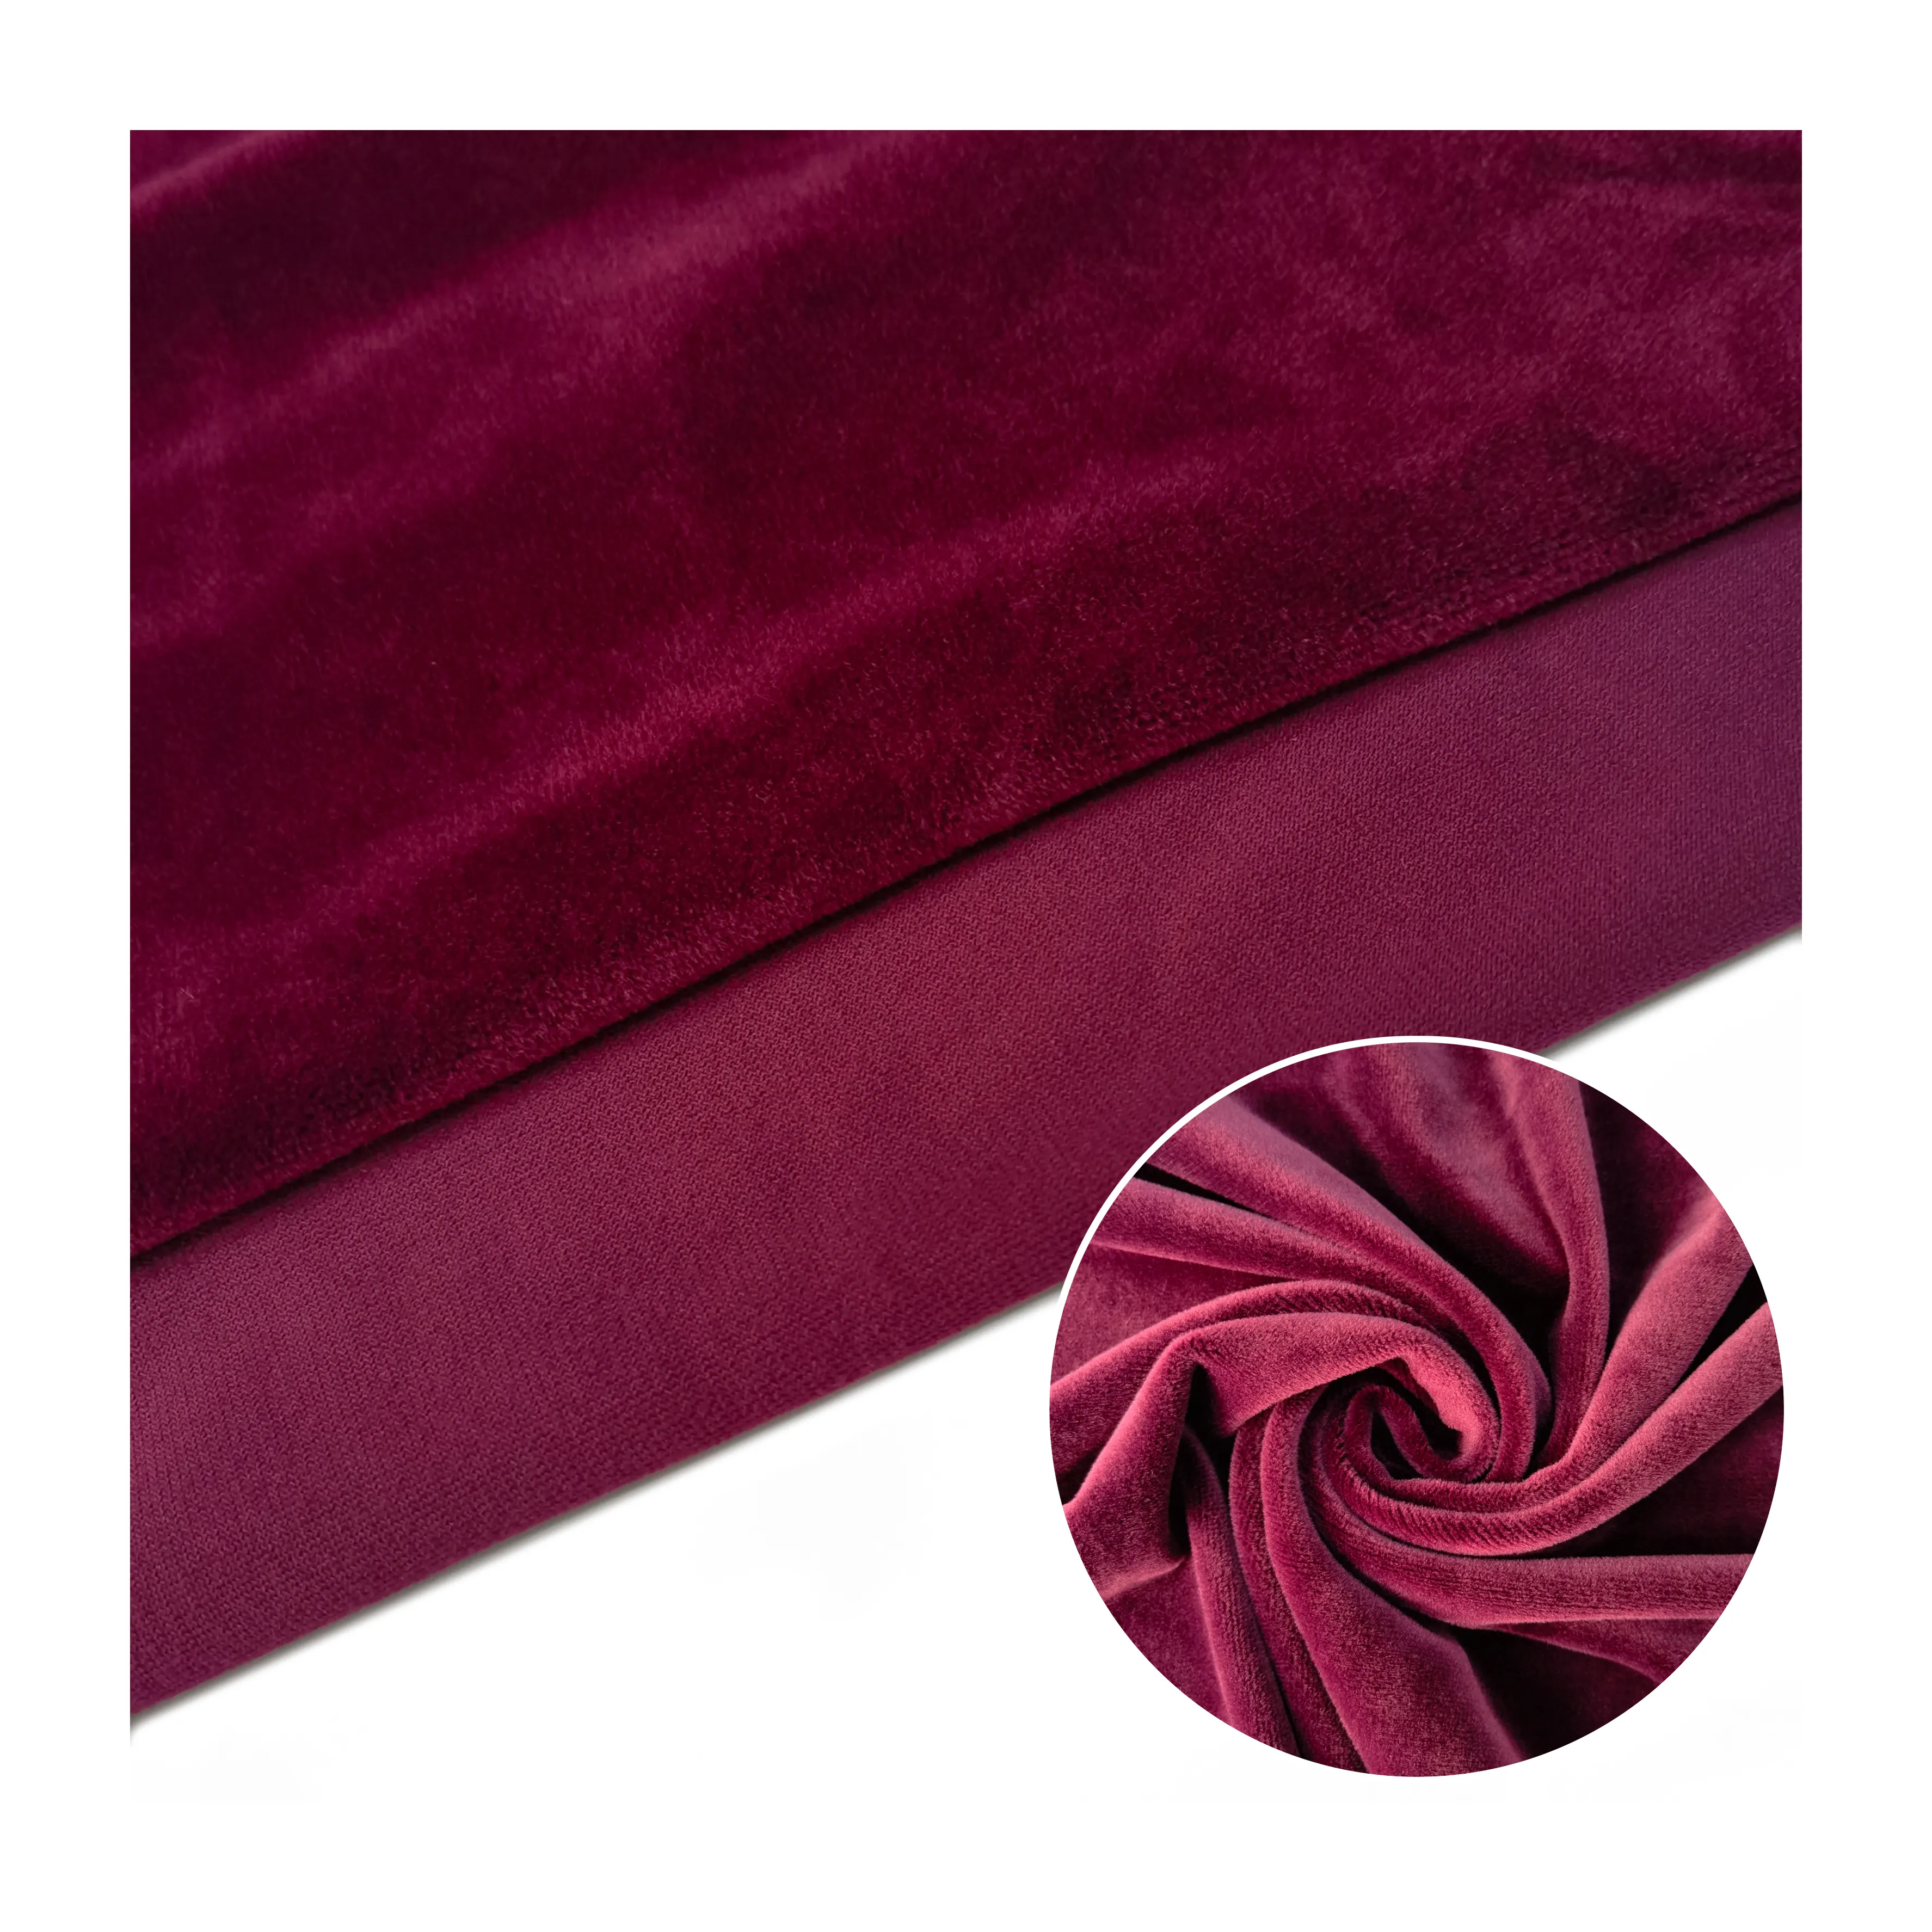 Super Soft 6% Spandex Stretch Print Velvet Premium Burgundy Velvet Tecido para Sofá, cama